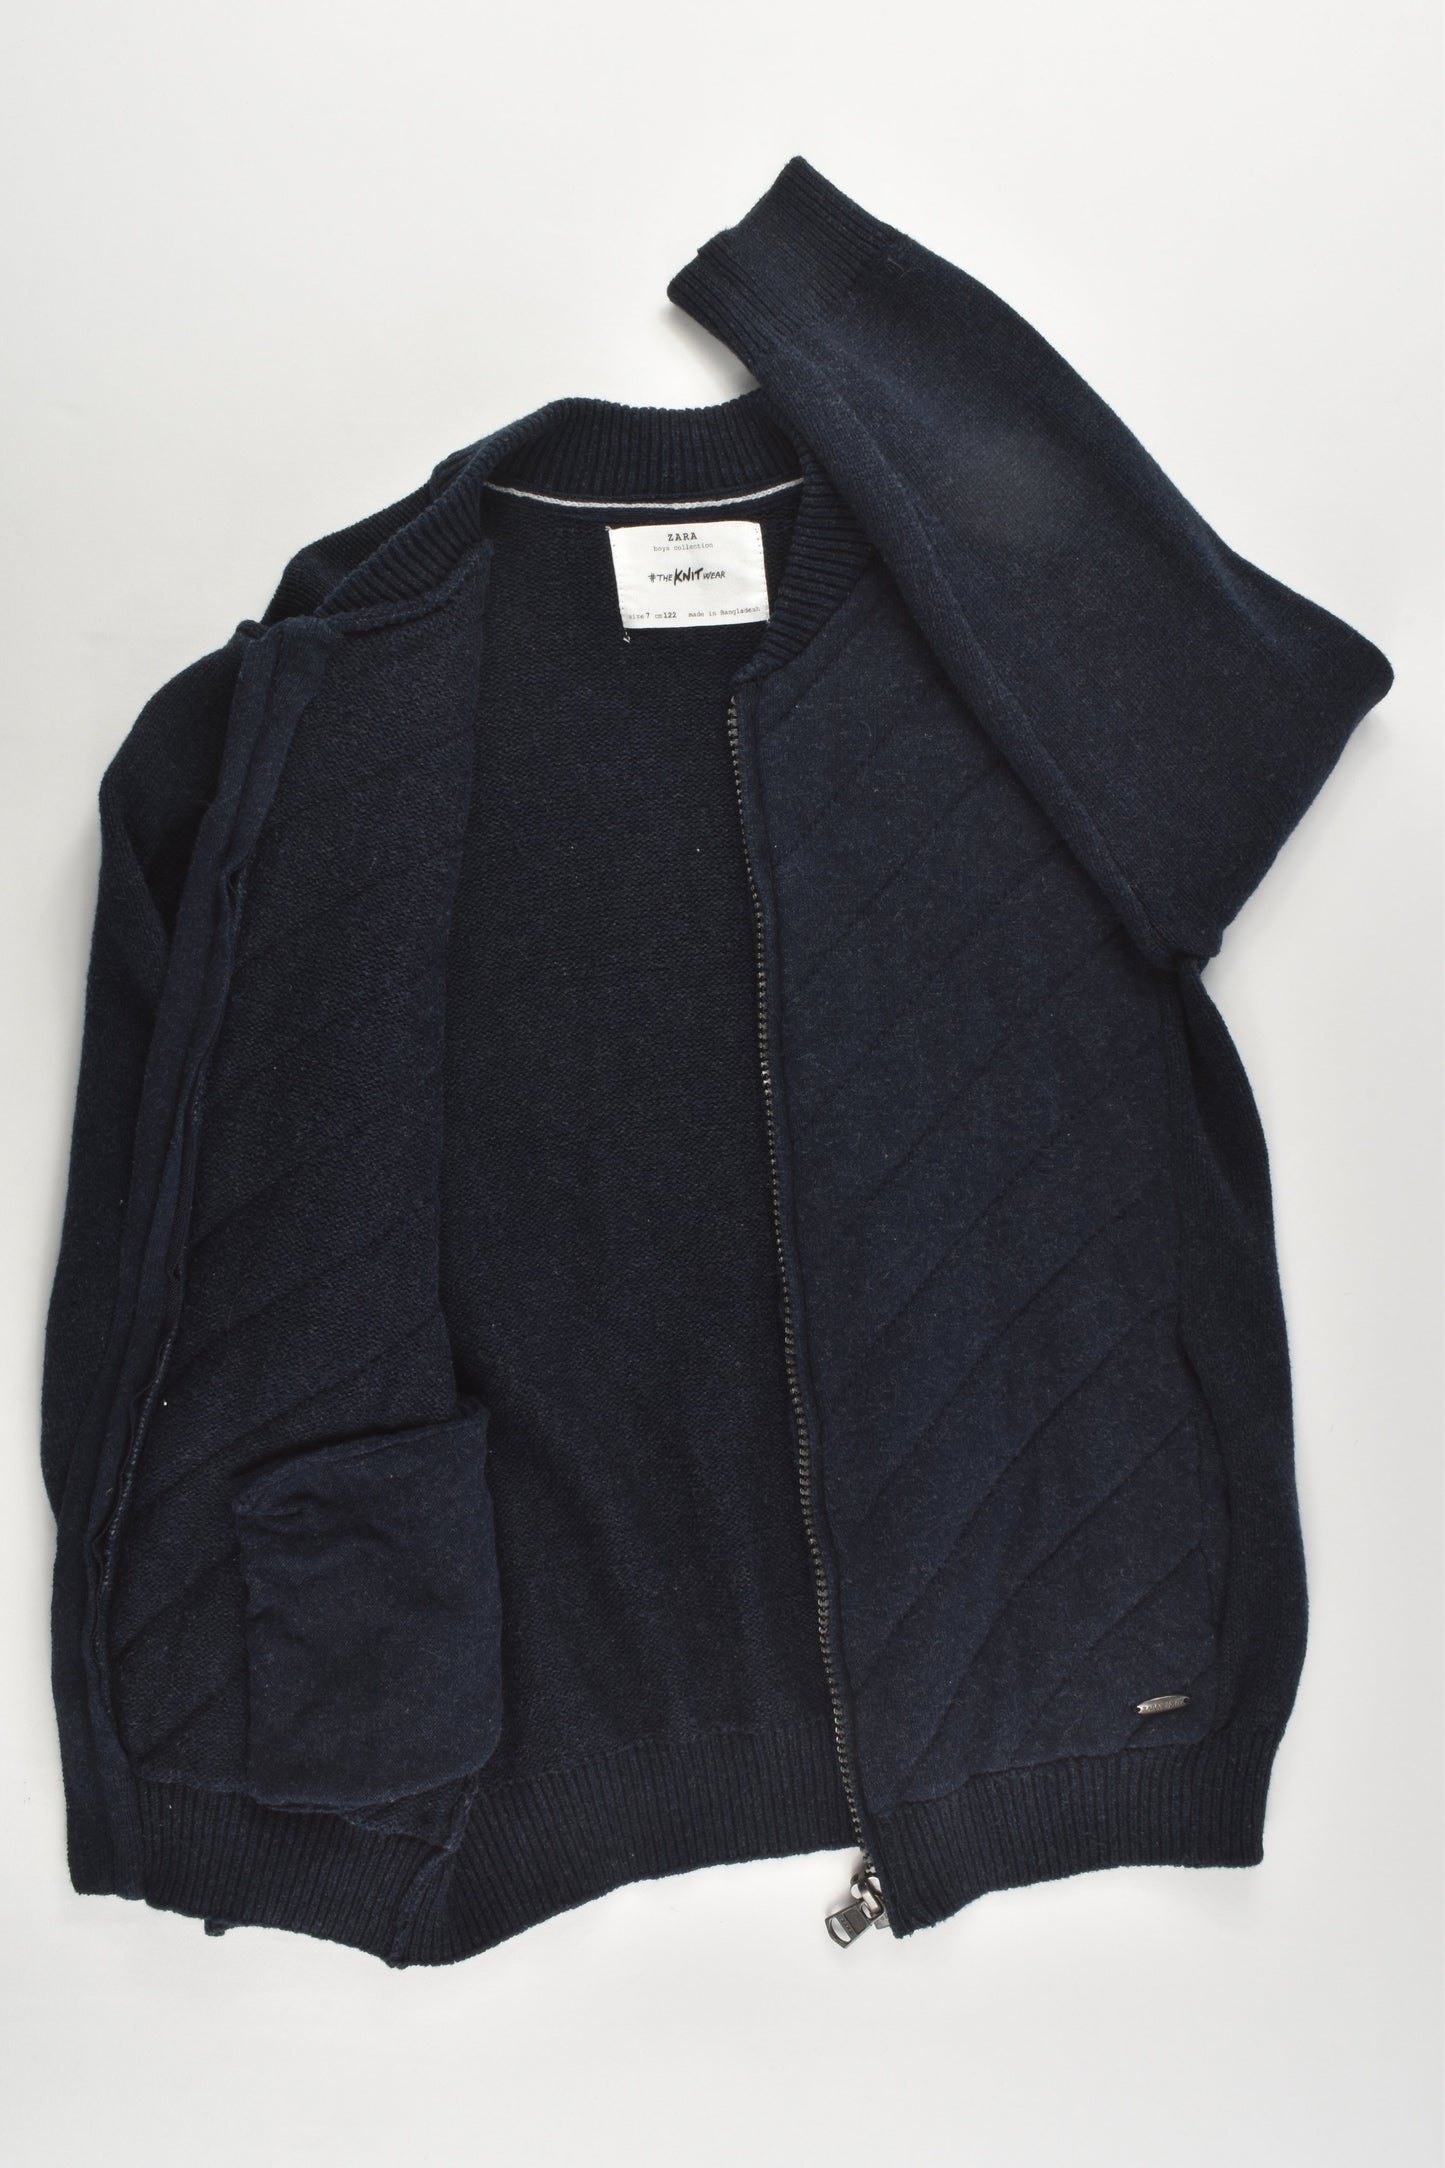 Zara Size 7 (122 cm) Navy Blue Knitted Jumper